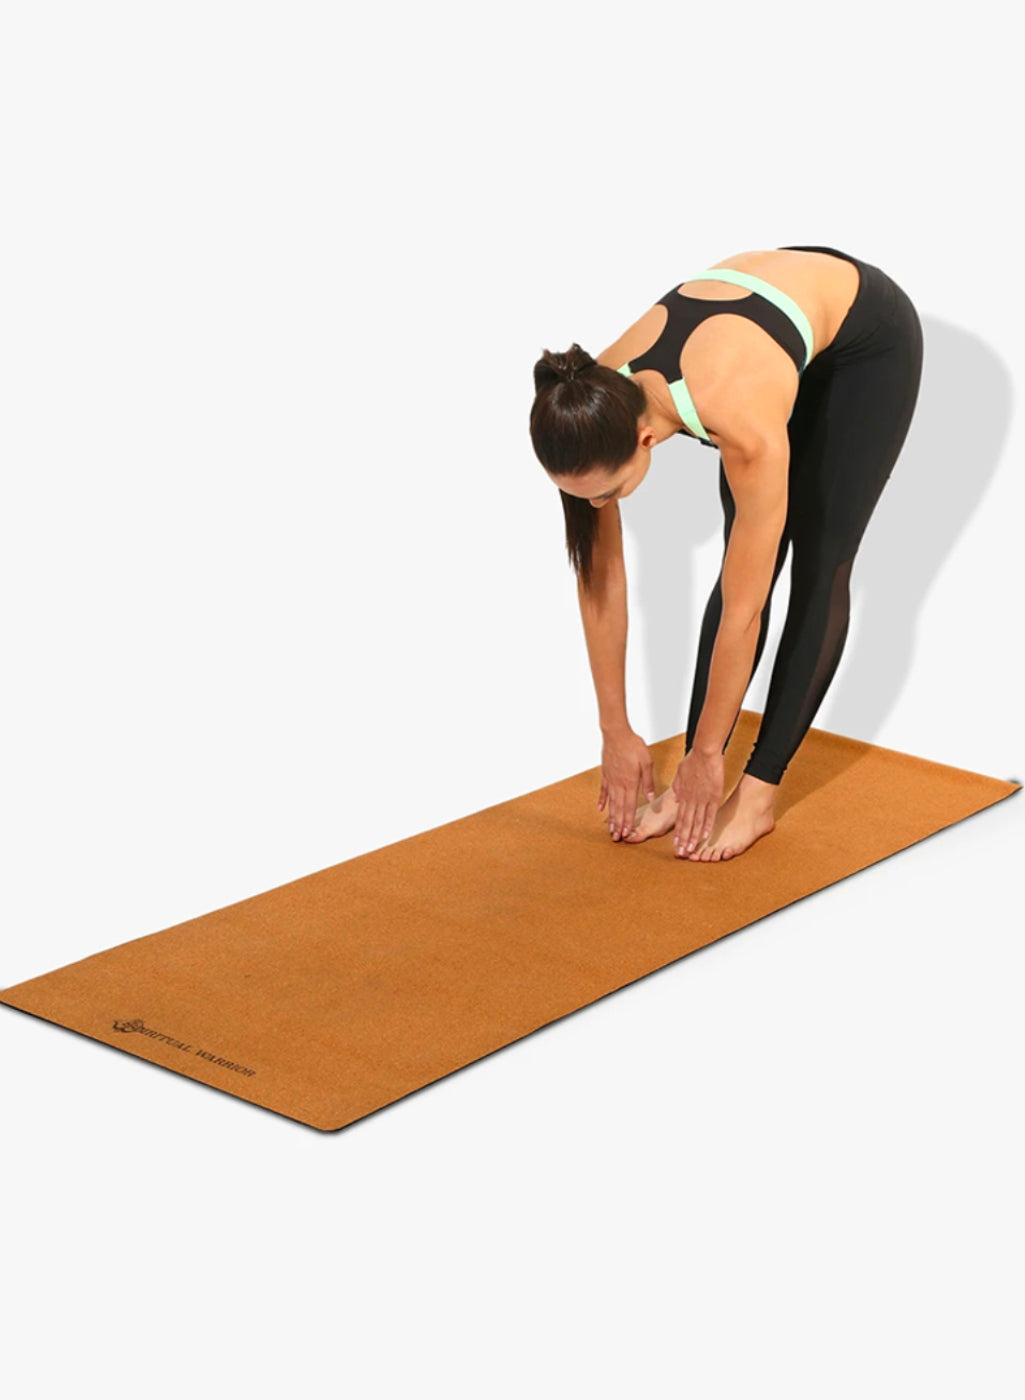 Spiritual Warrior Chakra Yoga Mat - Artist Designed, Premium Printed mats,  Non Slip, Great for Regular & Hot Yoga, Pilates and Workout (72 inch x 24